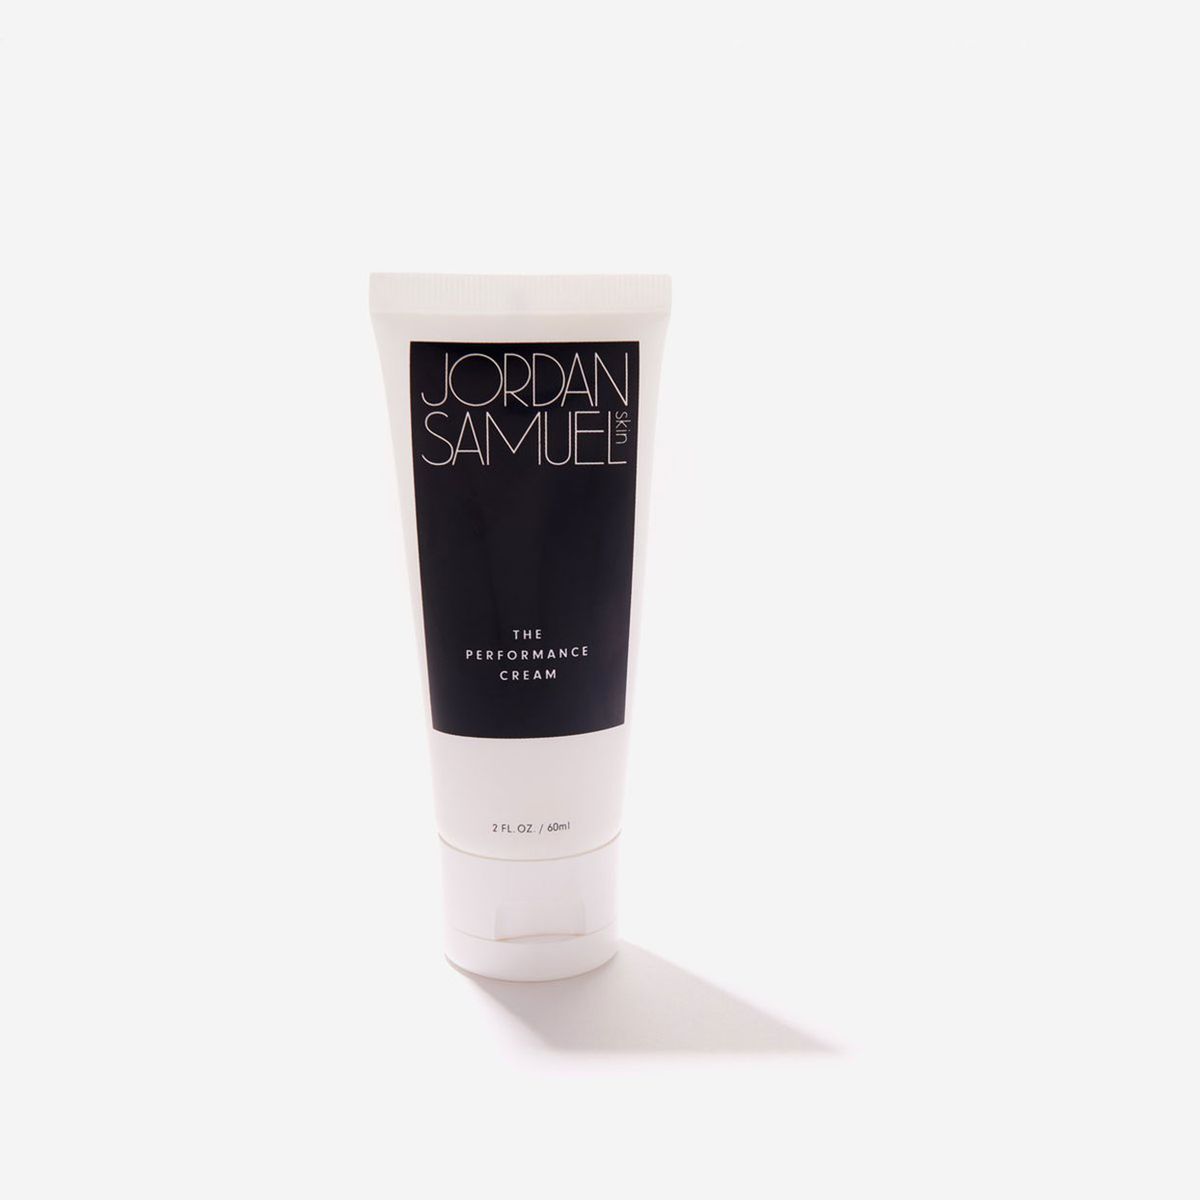 Jordan Samuel Skincare Products